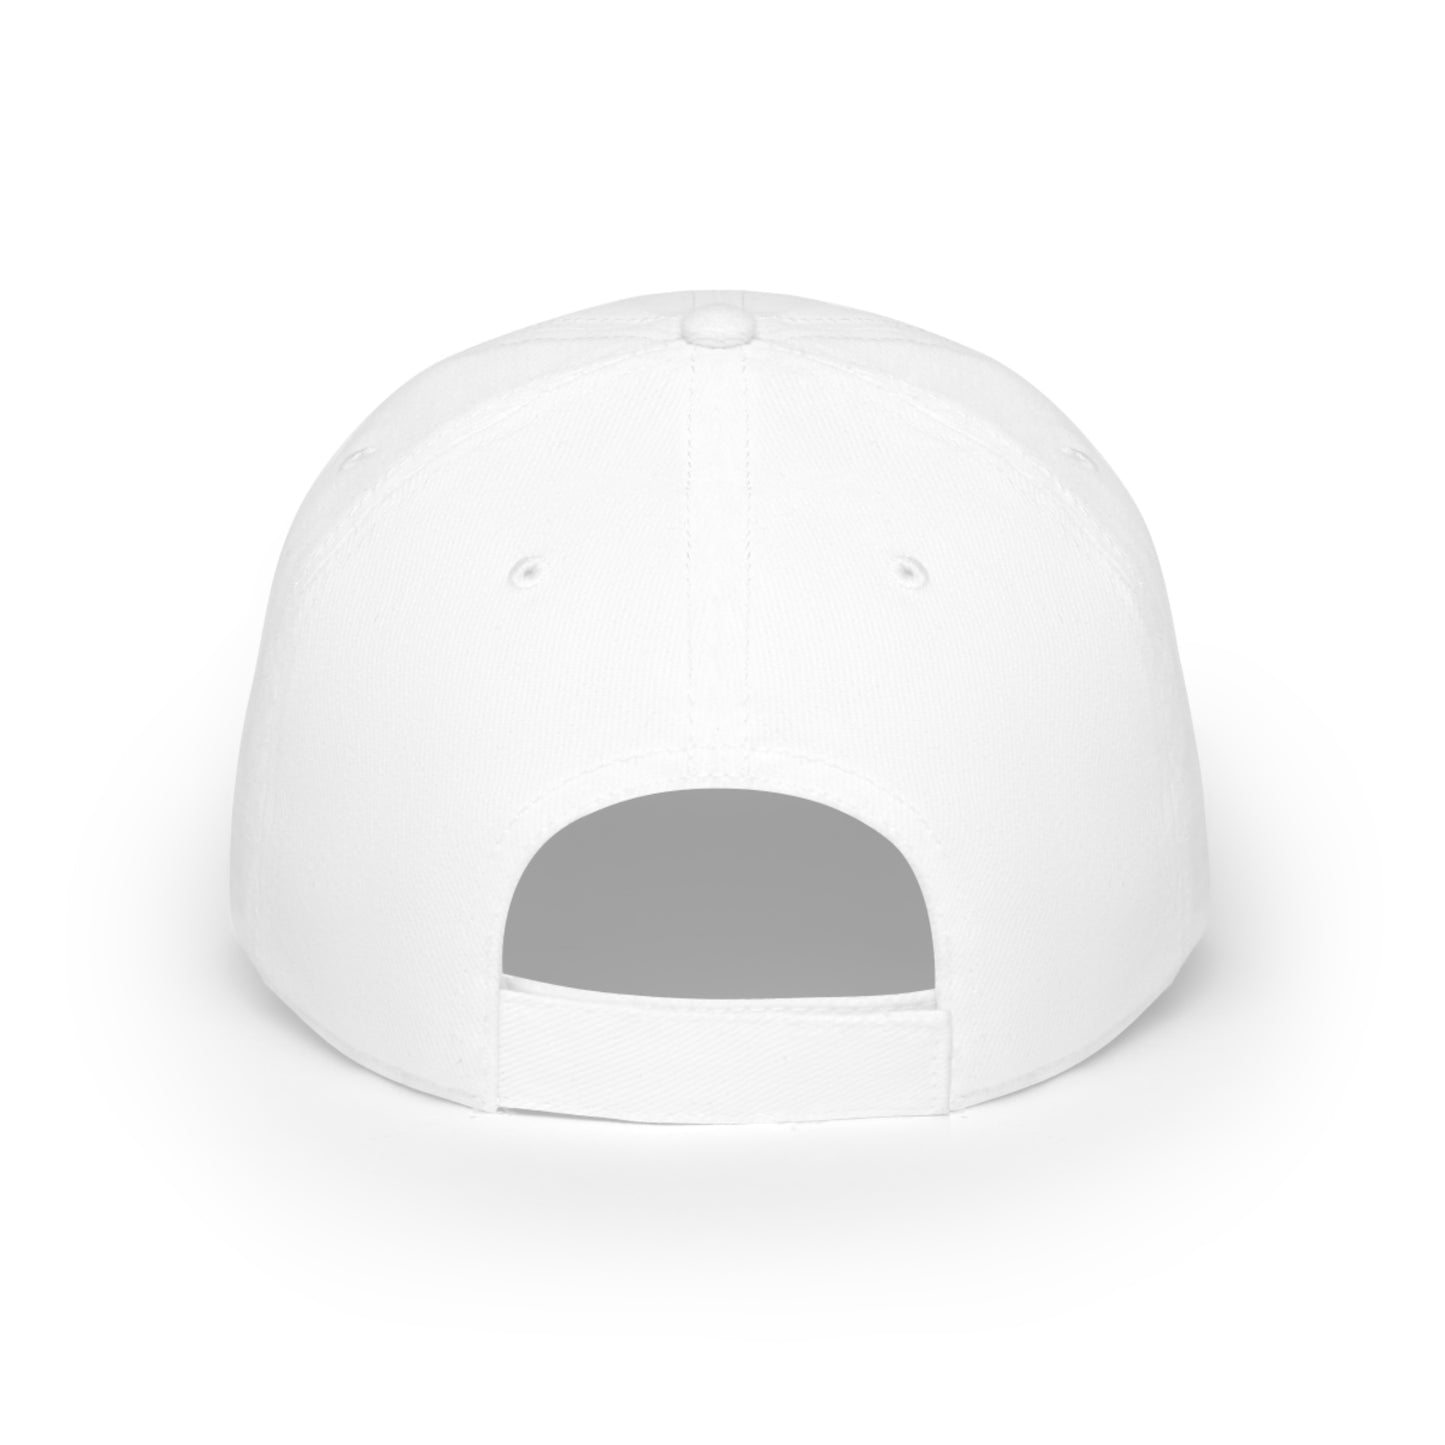 “Ambassador” Baseball Cap